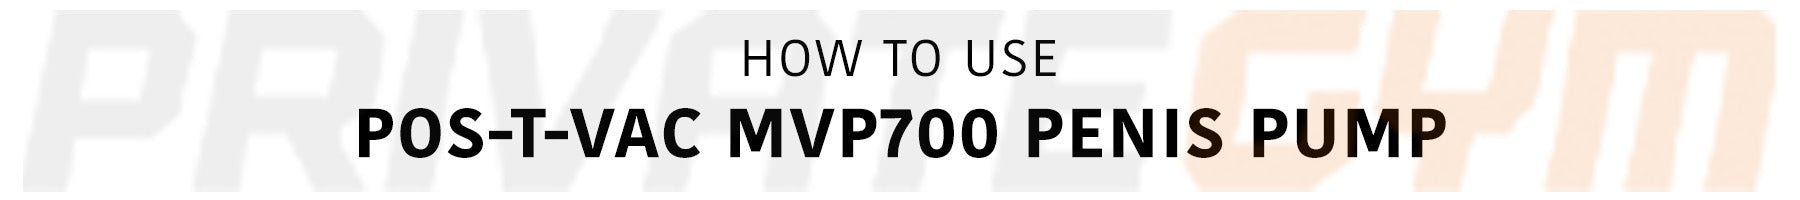 How to Use Pos-T-Vac MVP700 Medical-Grade Penis Pump Desktop